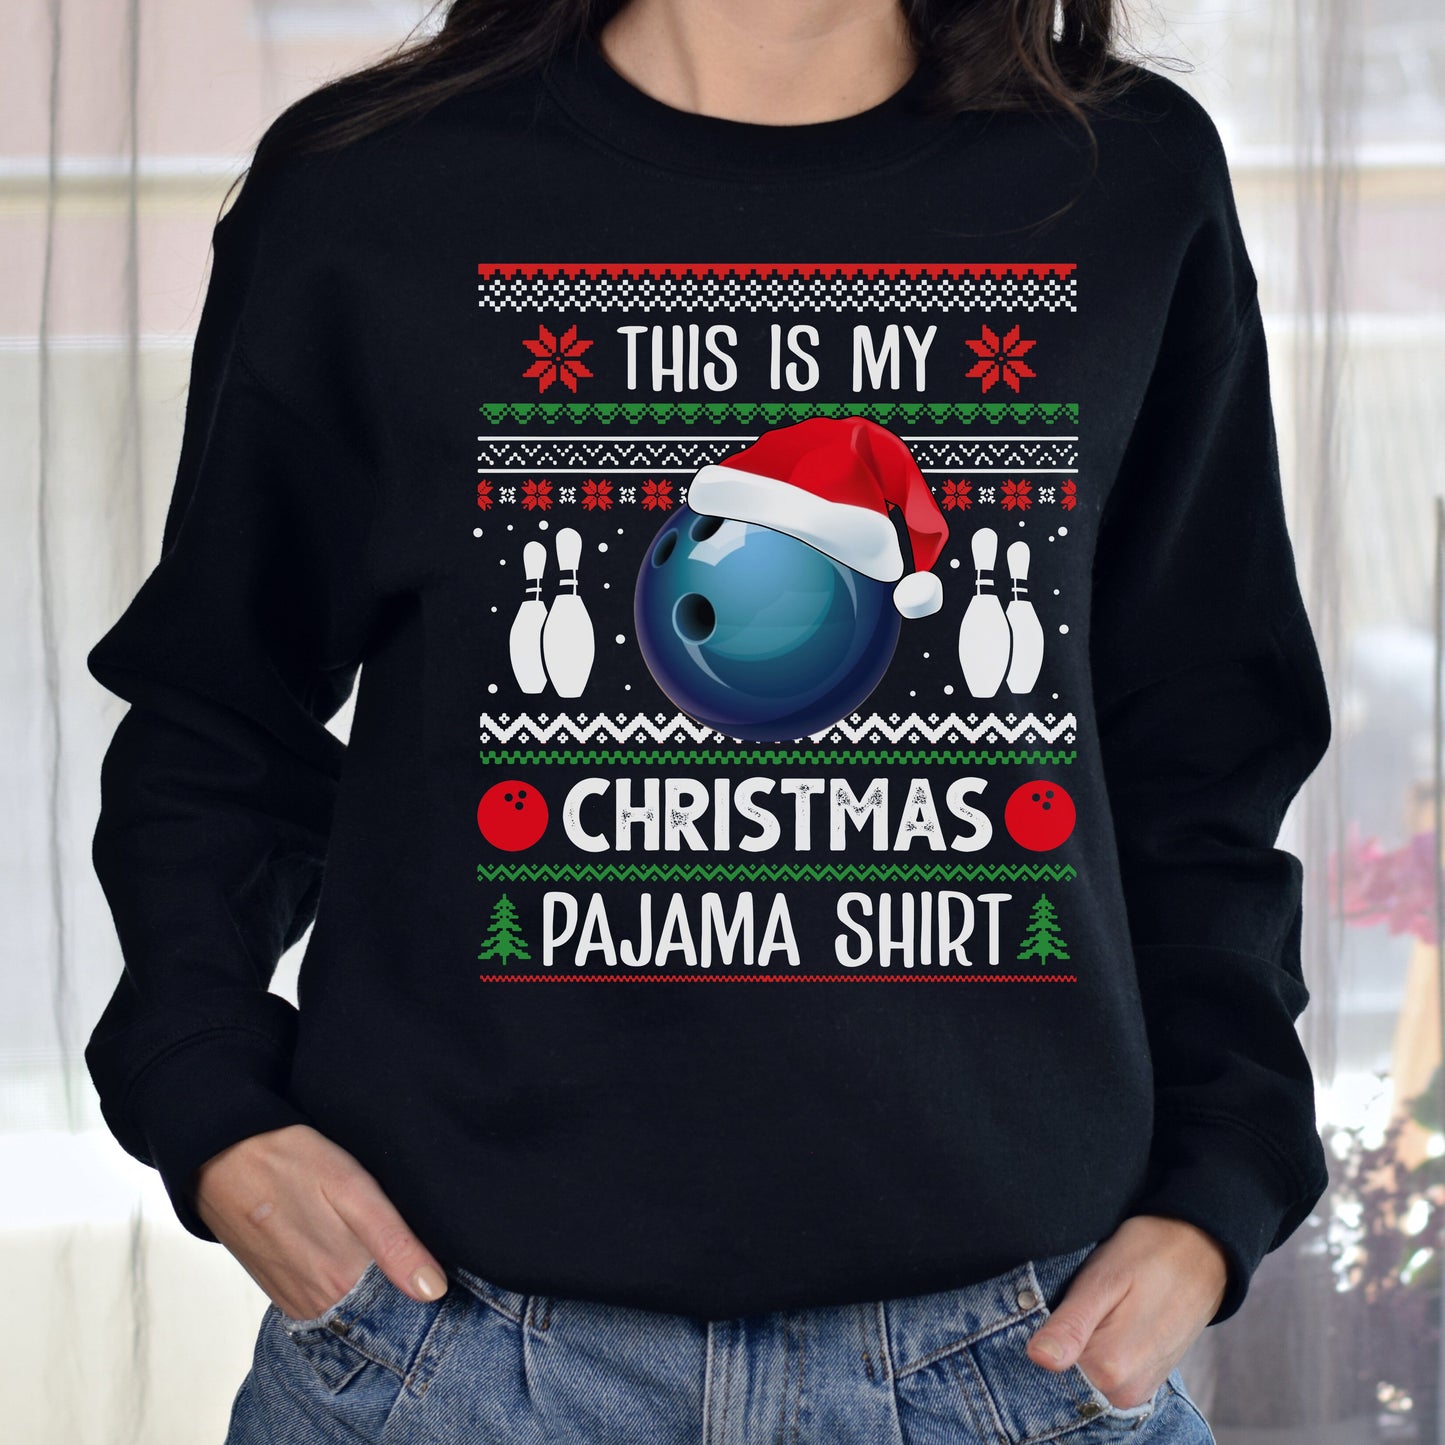 Bowling Christmas Unisex Sweatshirt bowler Ugly sweater Black Dark Heather-Family-Gift-Planet